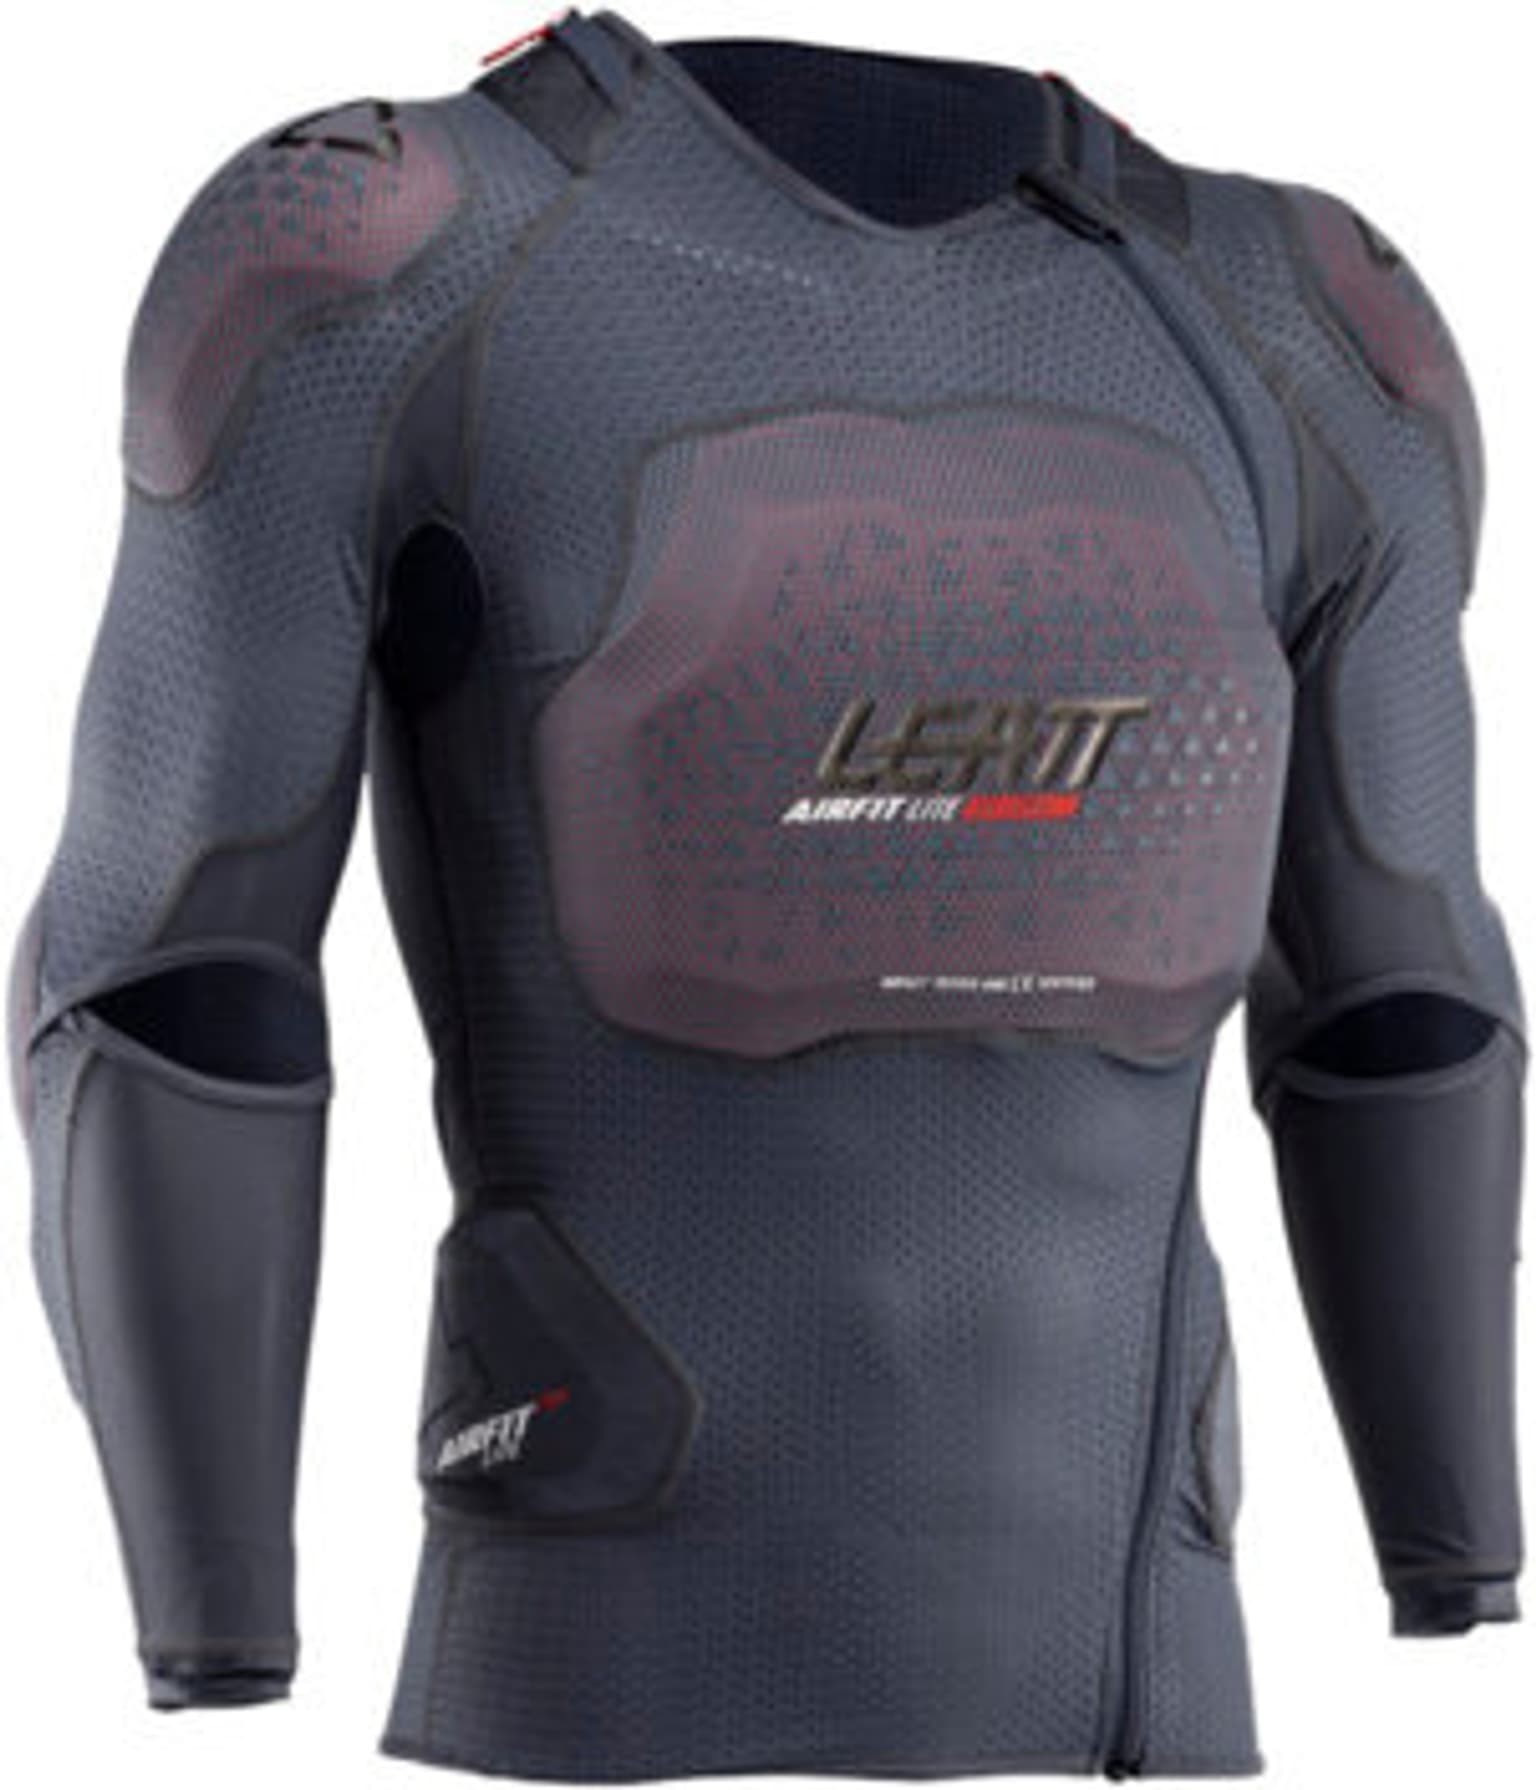 Leatt Leatt 3DF Body Protector Airfit lite Evo Protektoren schwarz 1